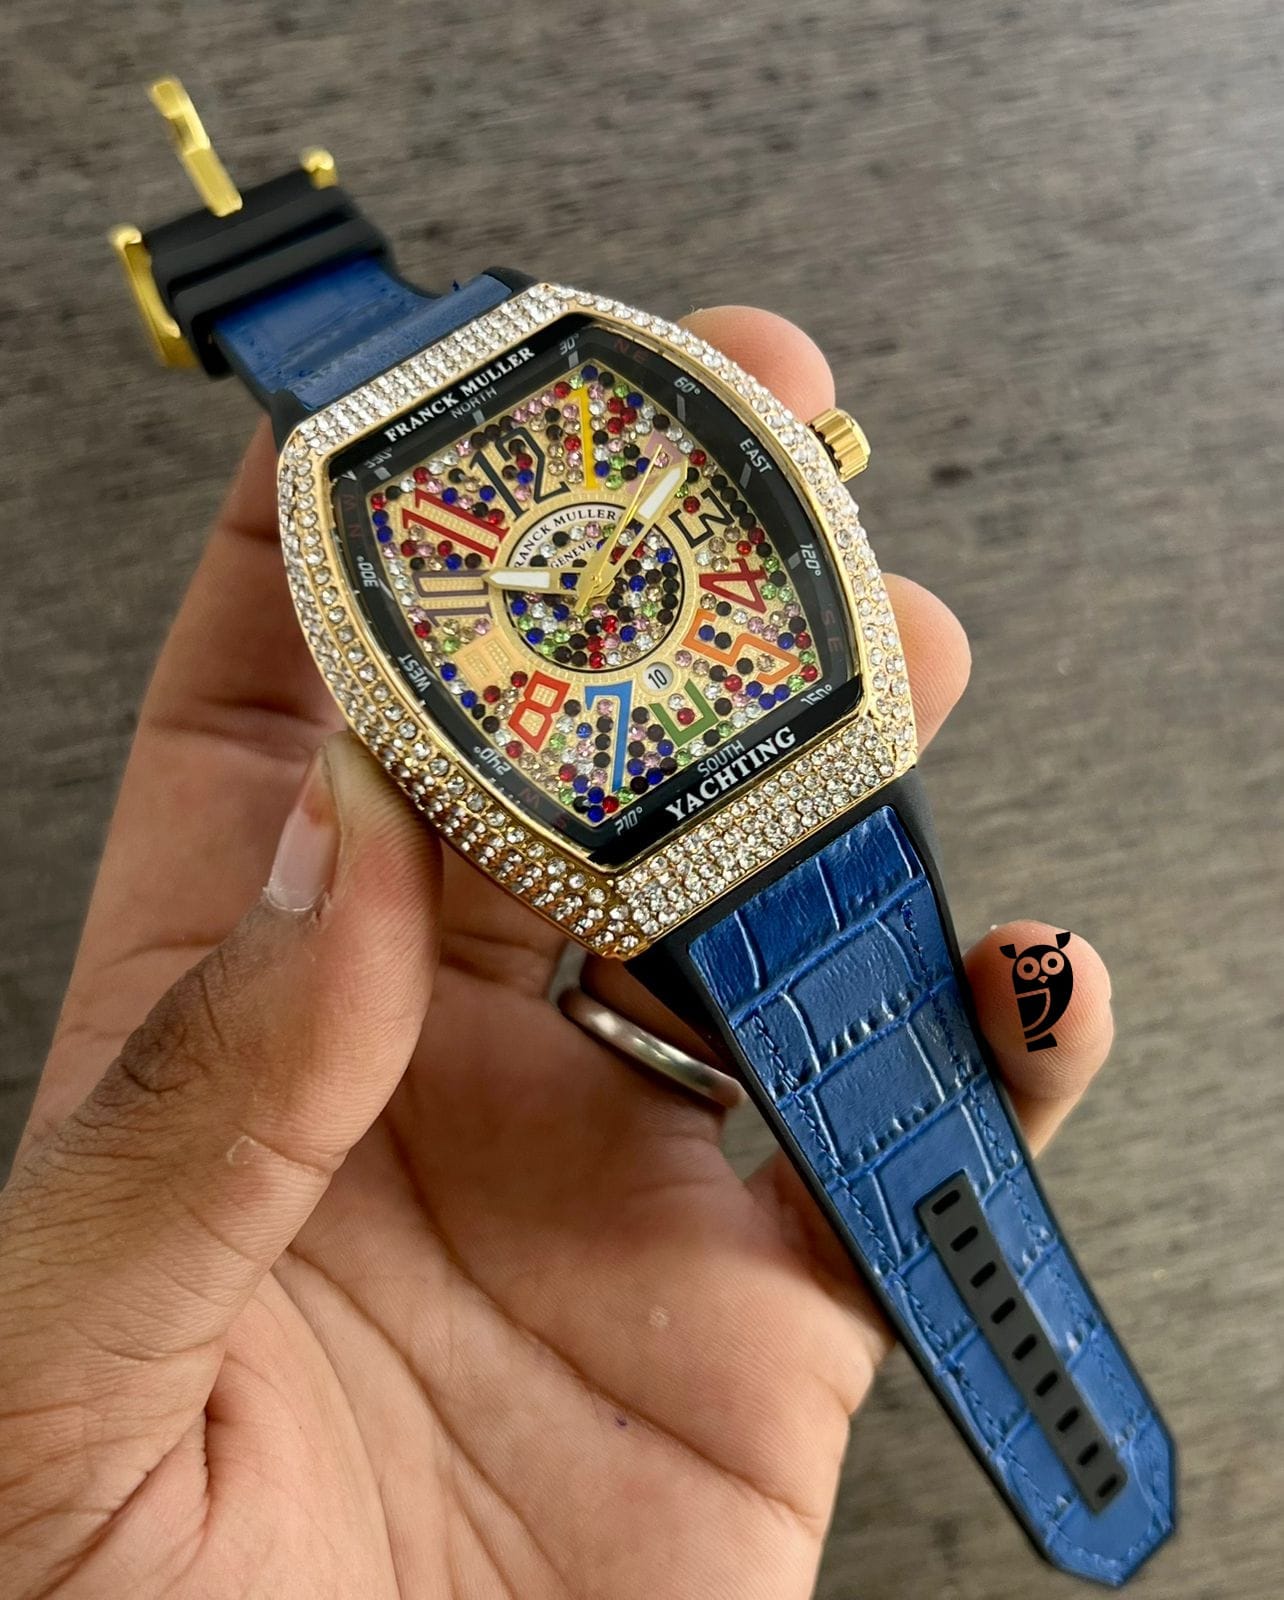 Franck Muller Diamond Watch